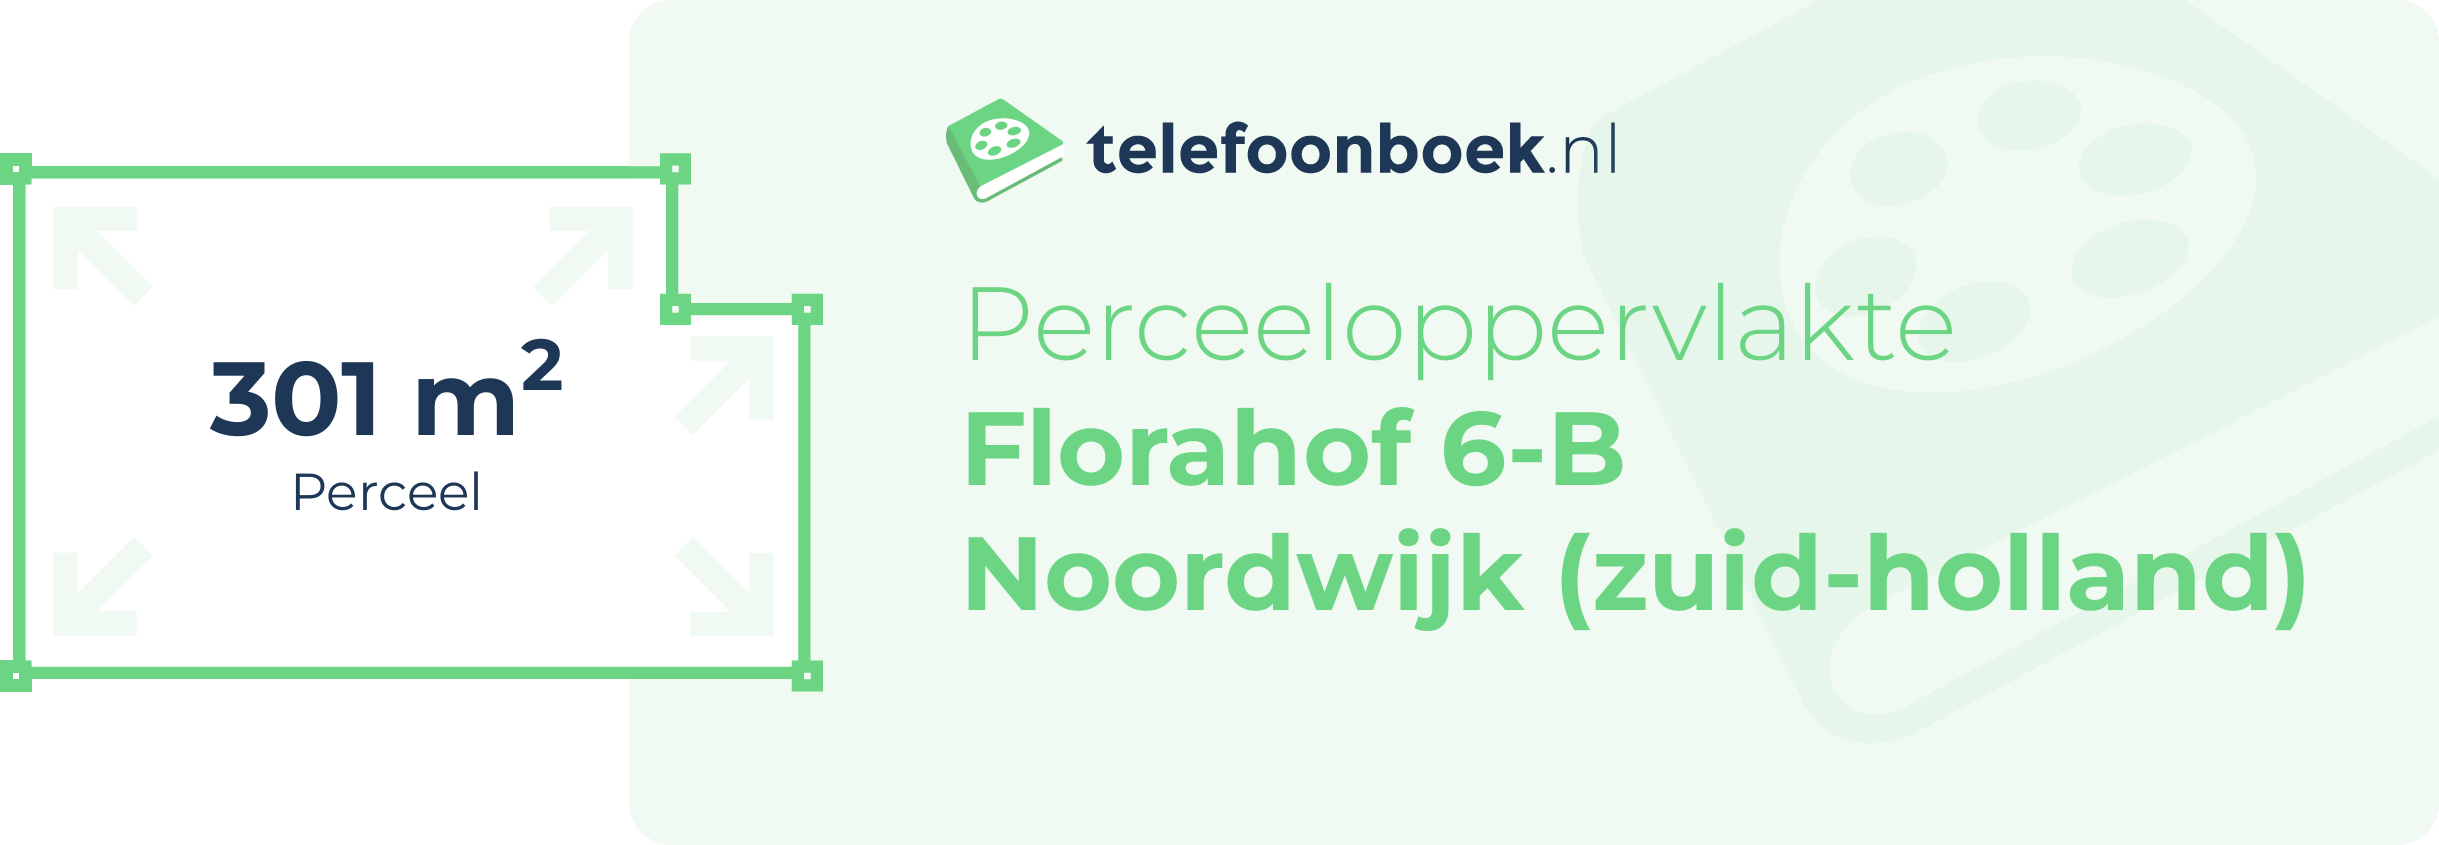 Perceeloppervlakte Florahof 6-B Noordwijk (Zuid-Holland)